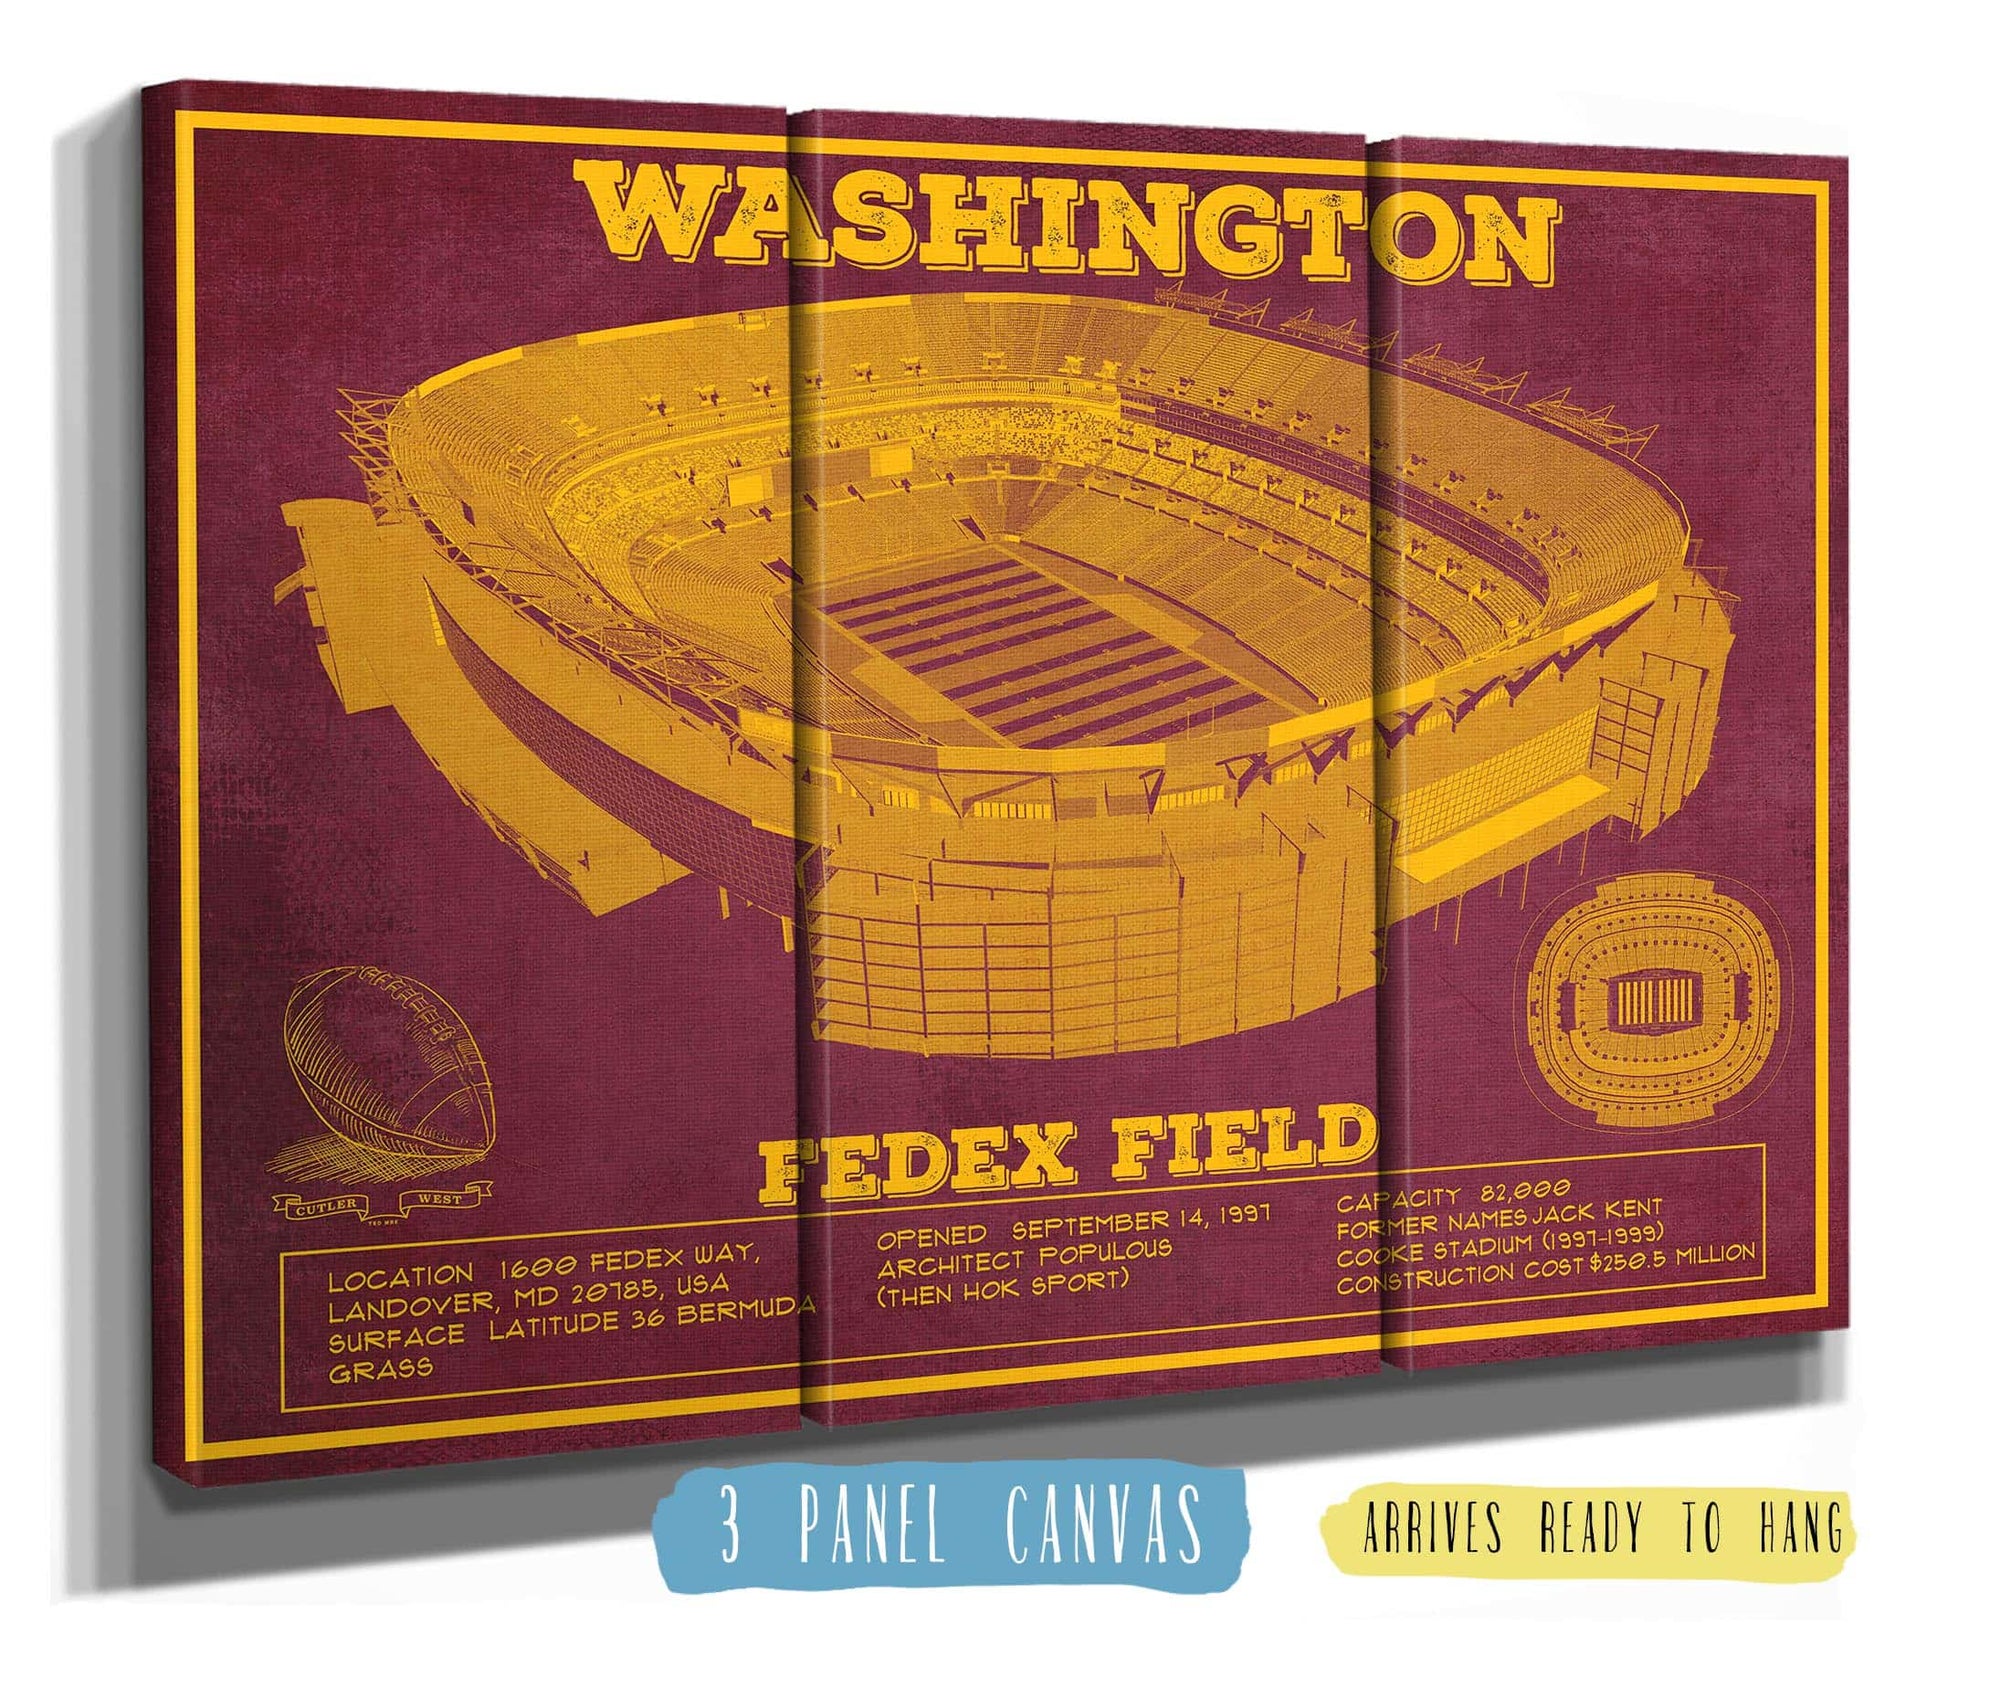 Cutler West Washington Football Team Stadium Art - Fedex Field Wall Art